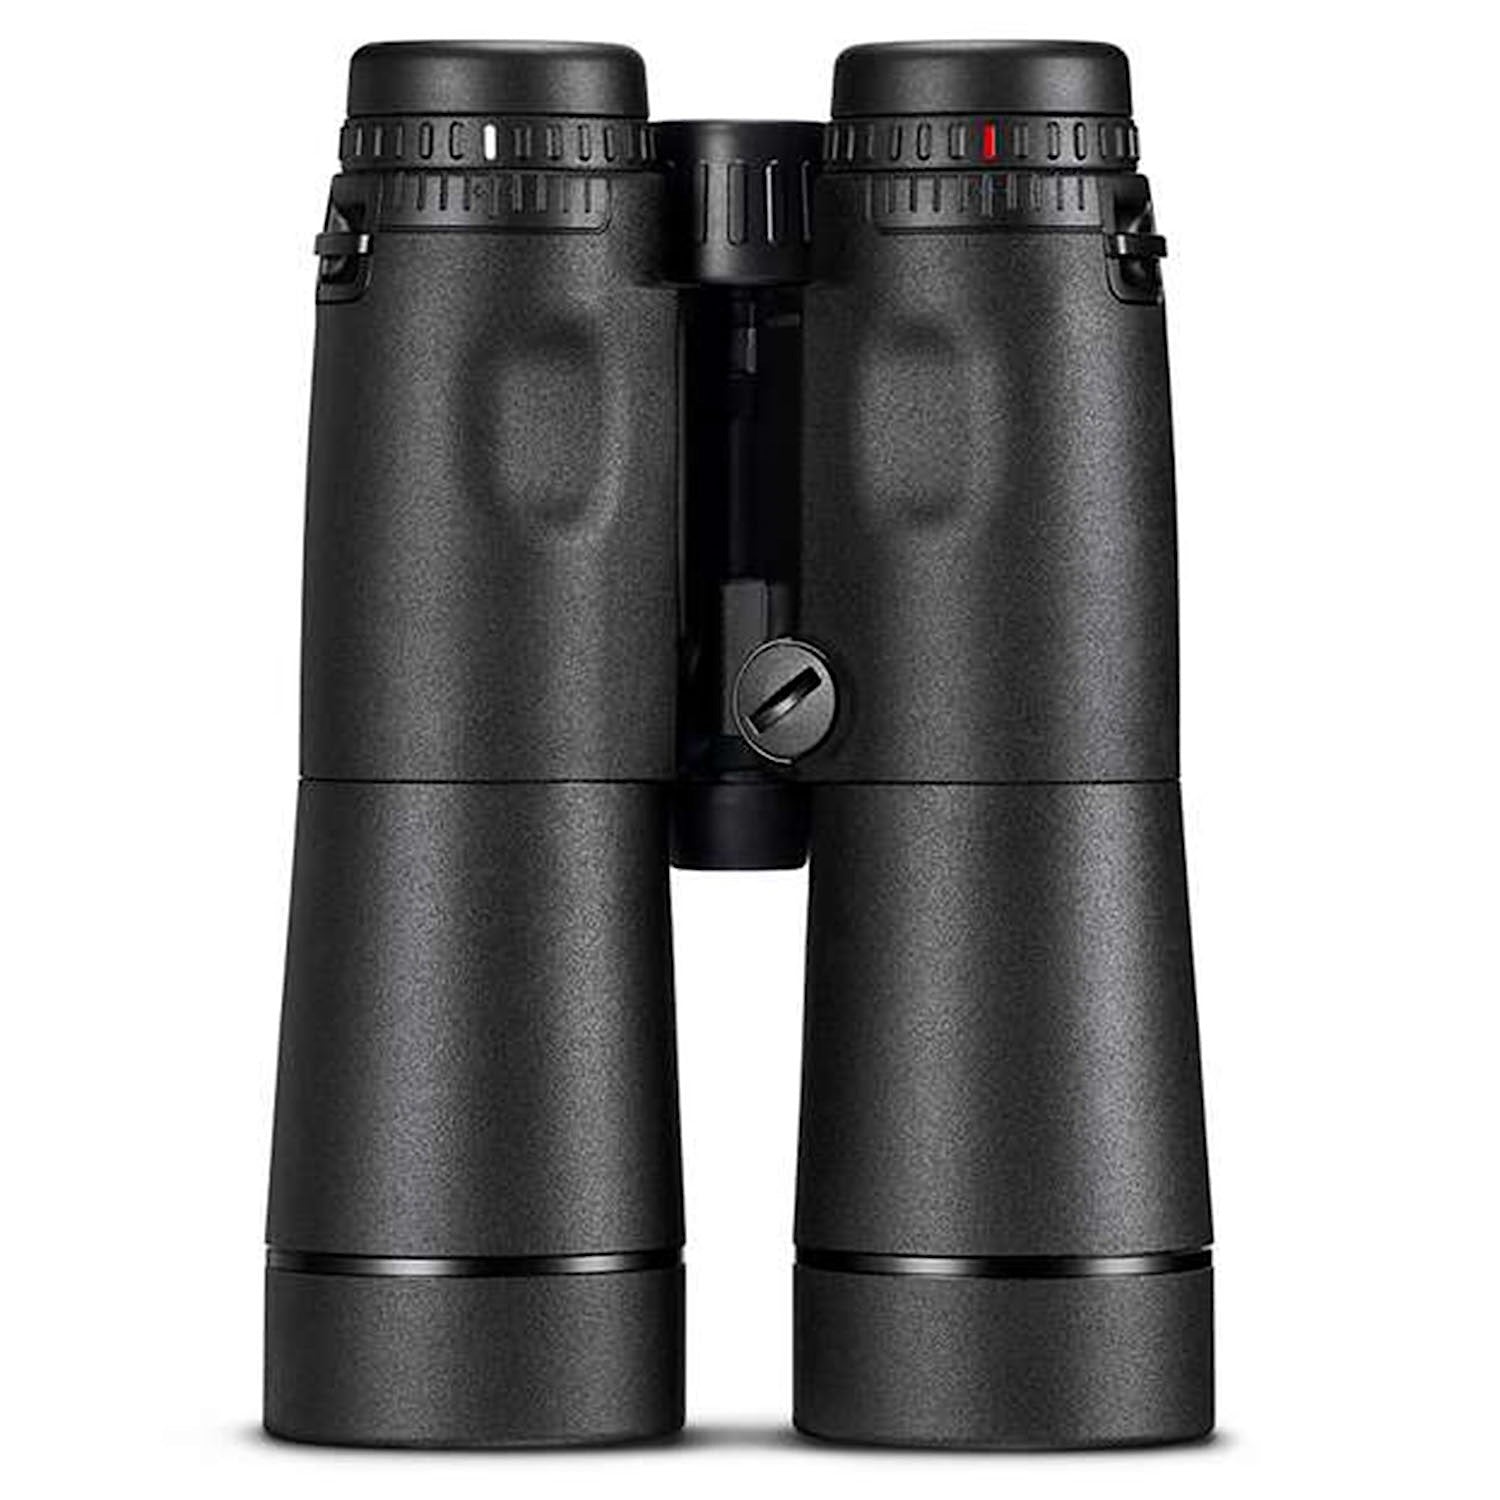 Leica Geovid R Binoculars